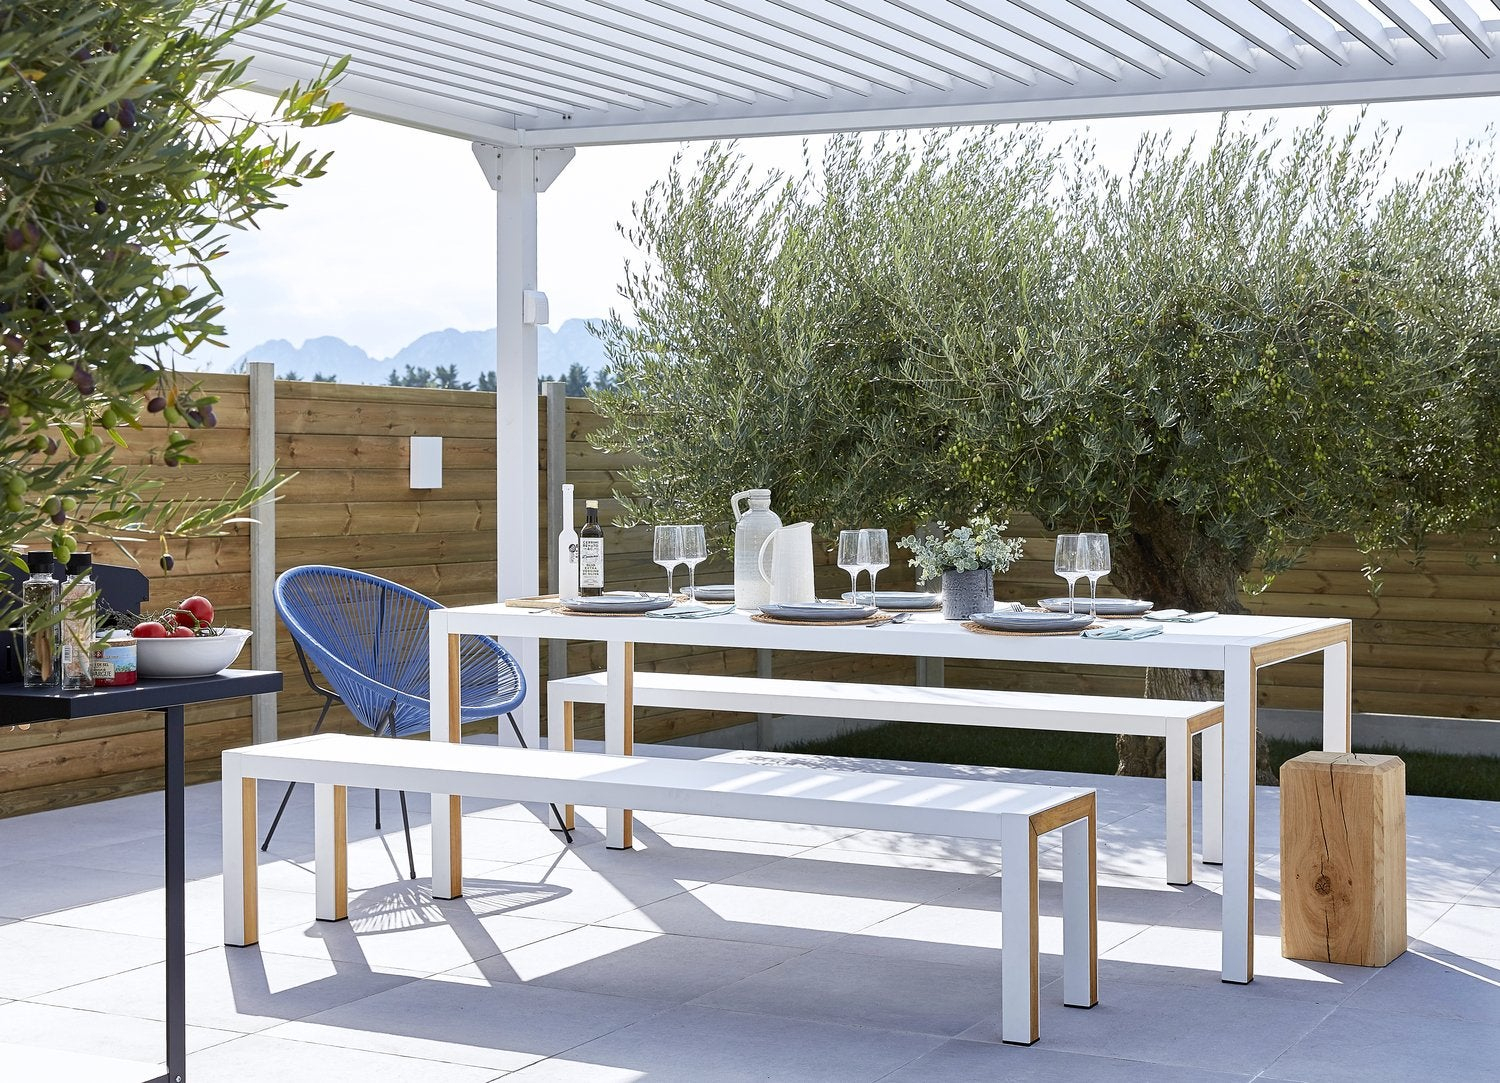 La Nouvelle Collection De Salon De Jardin 2020 | Leroy Merlin serapportantà Mobilier De Jardin Leroy Merlin